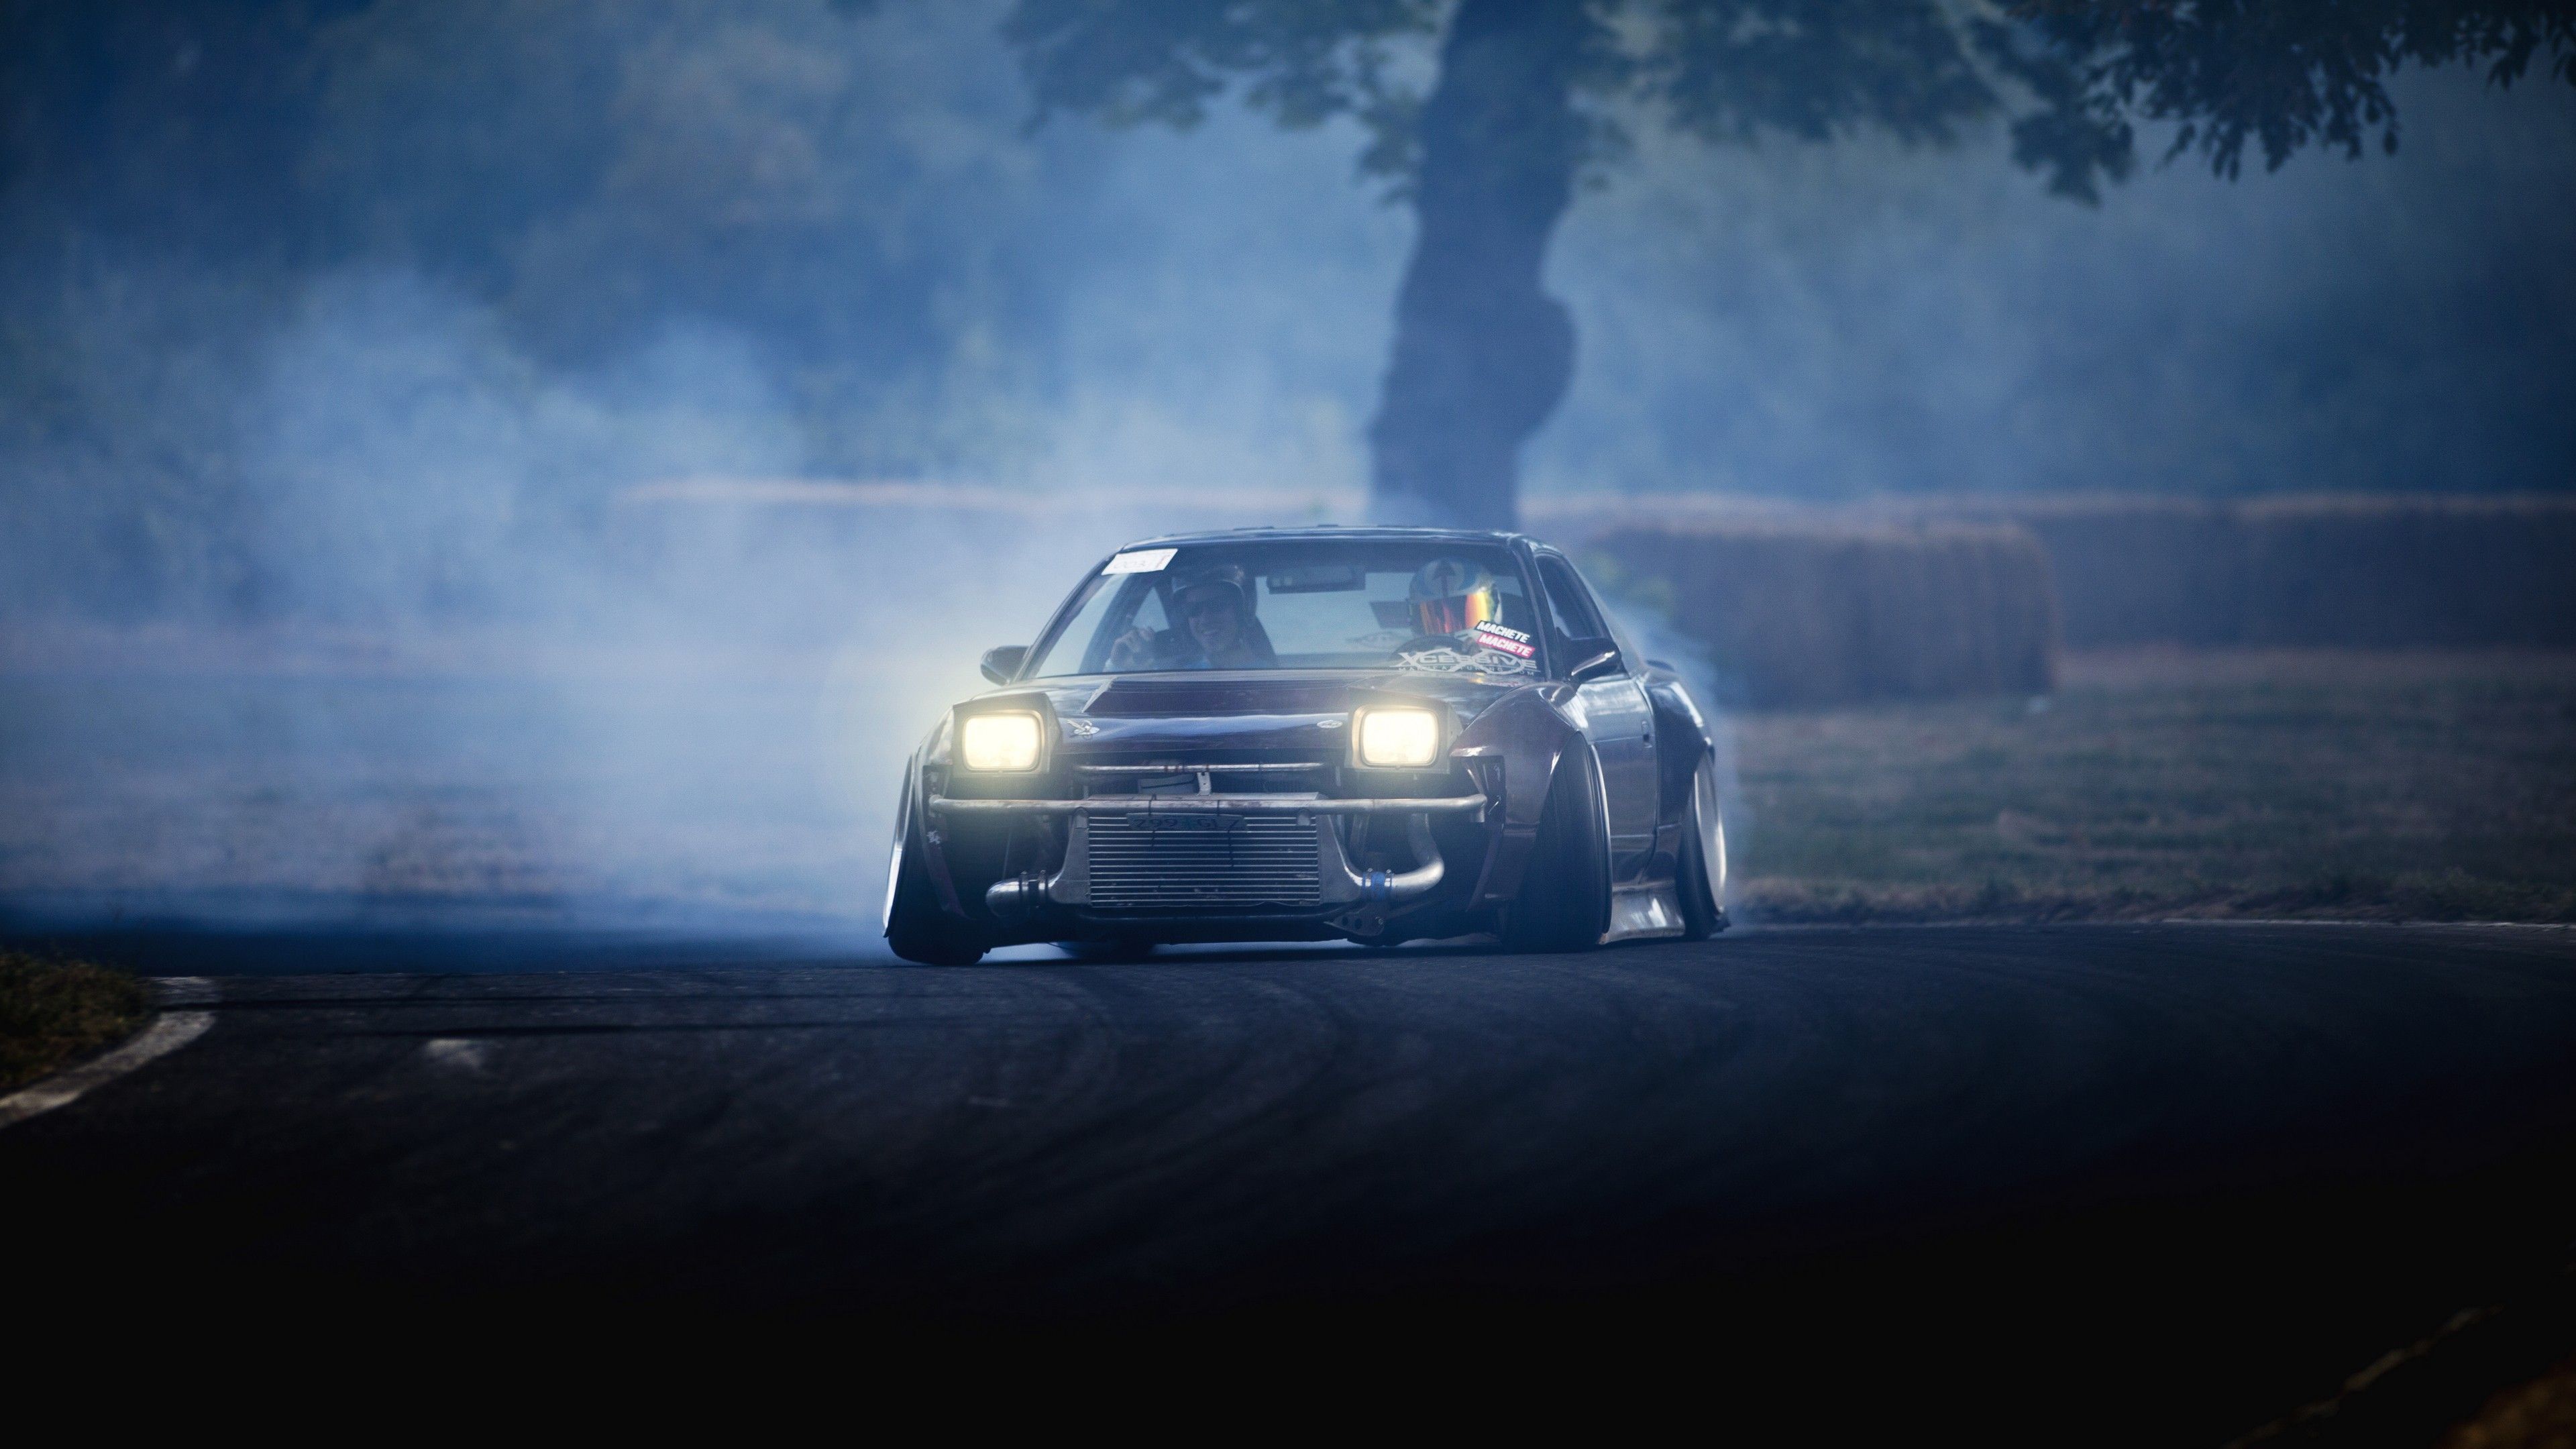 Drift Racing Aesthetic Wallpapers - HD Car Racing Backgrounds